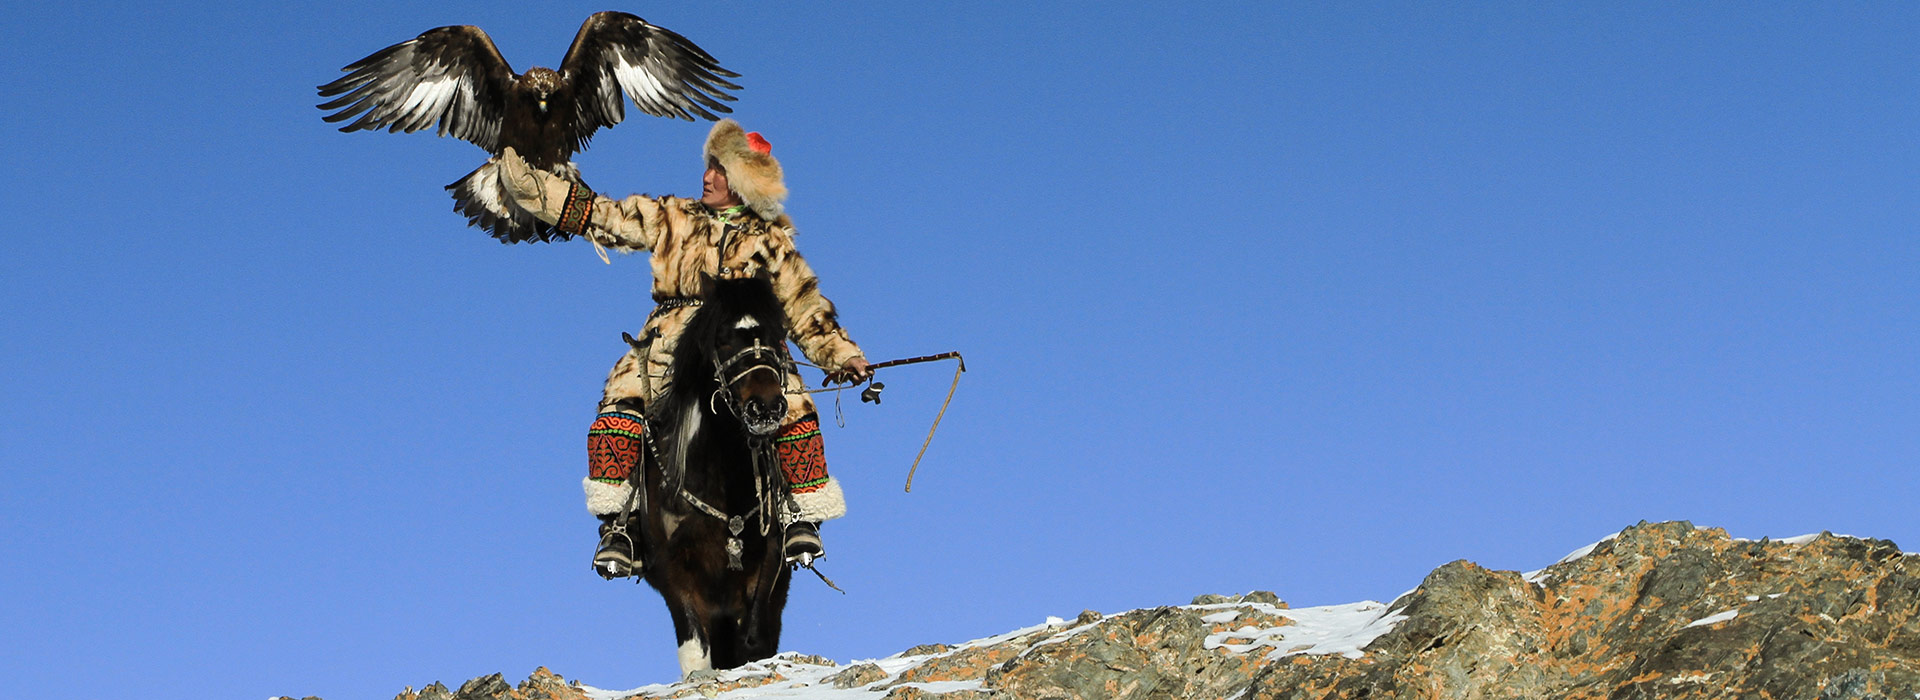 ready-to-hunt-eagle-hunter